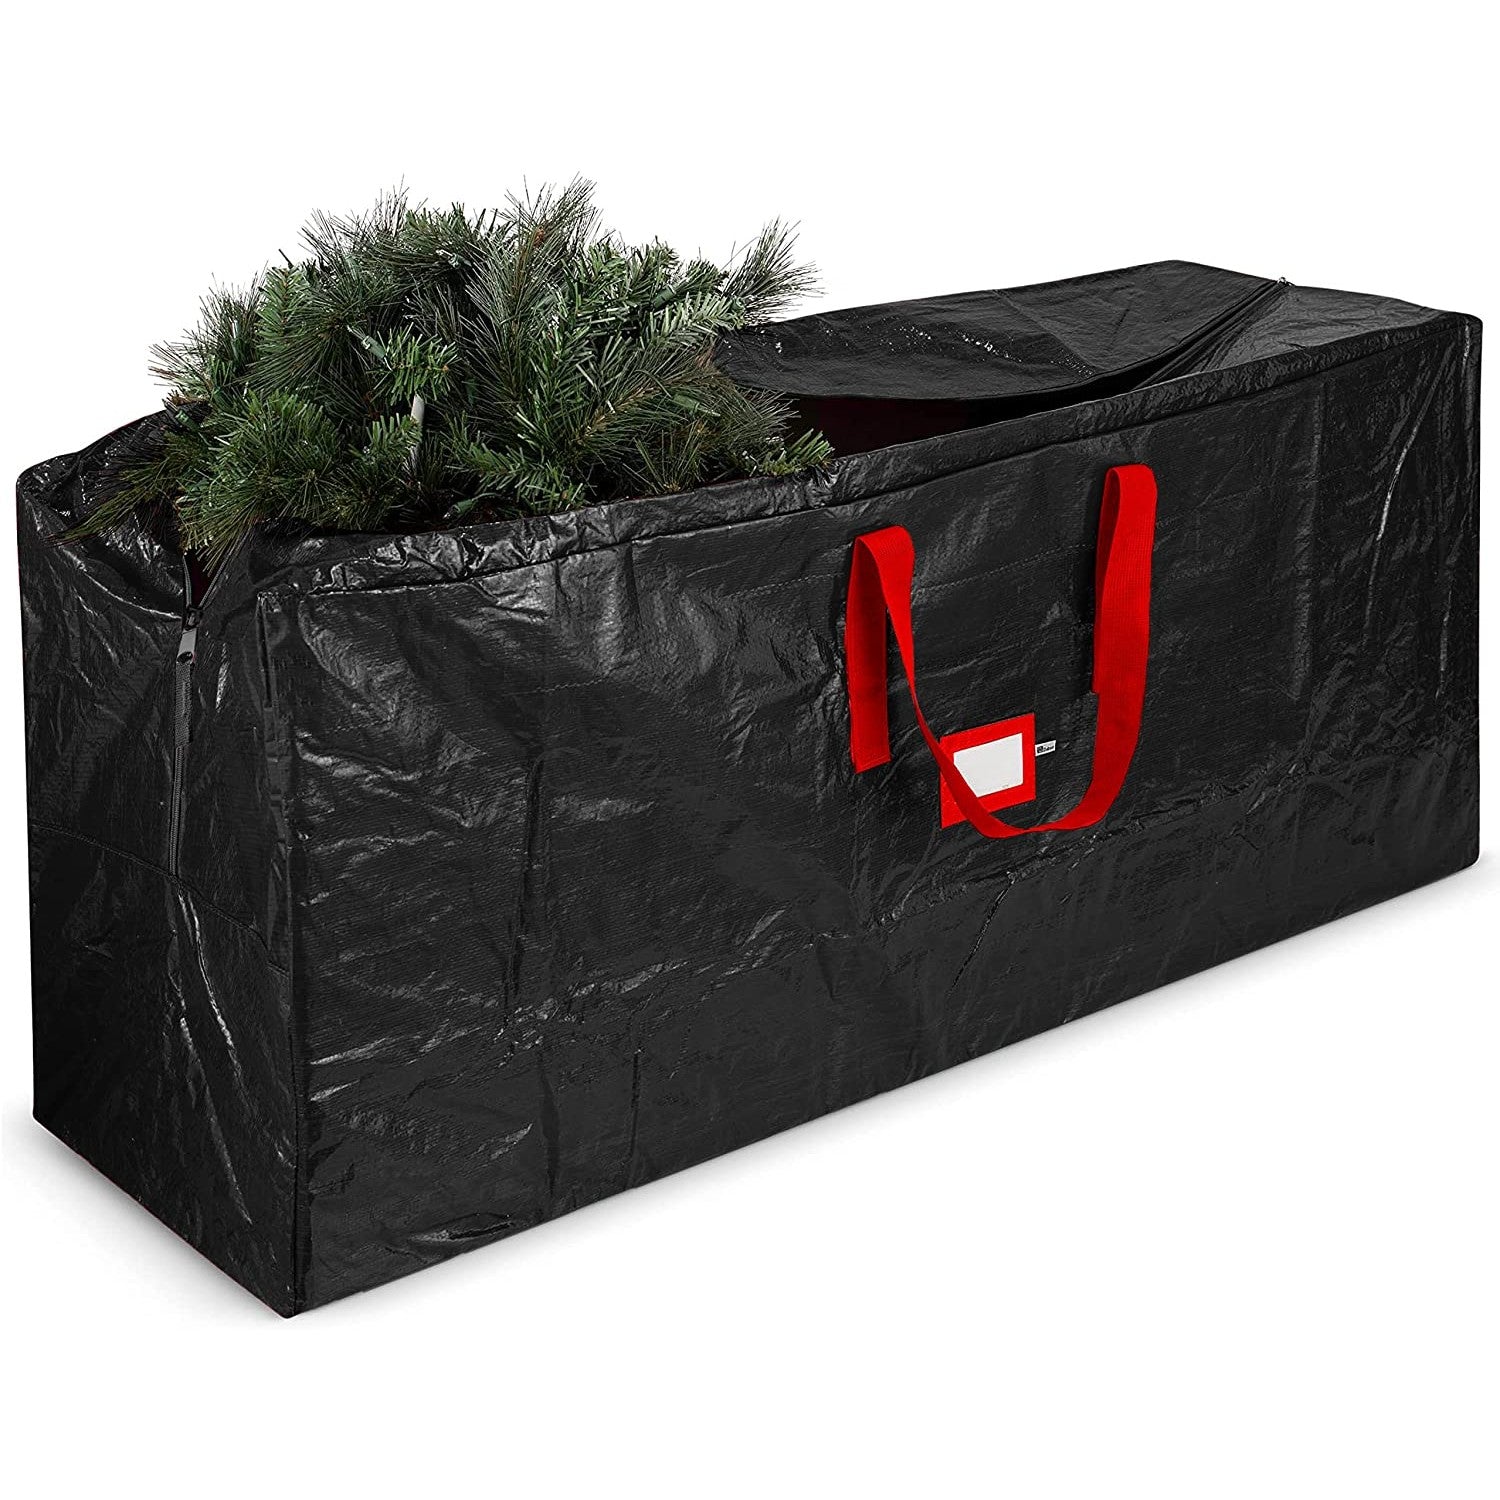 A black Christmas tree storage bag with a Christmas tree inside it.